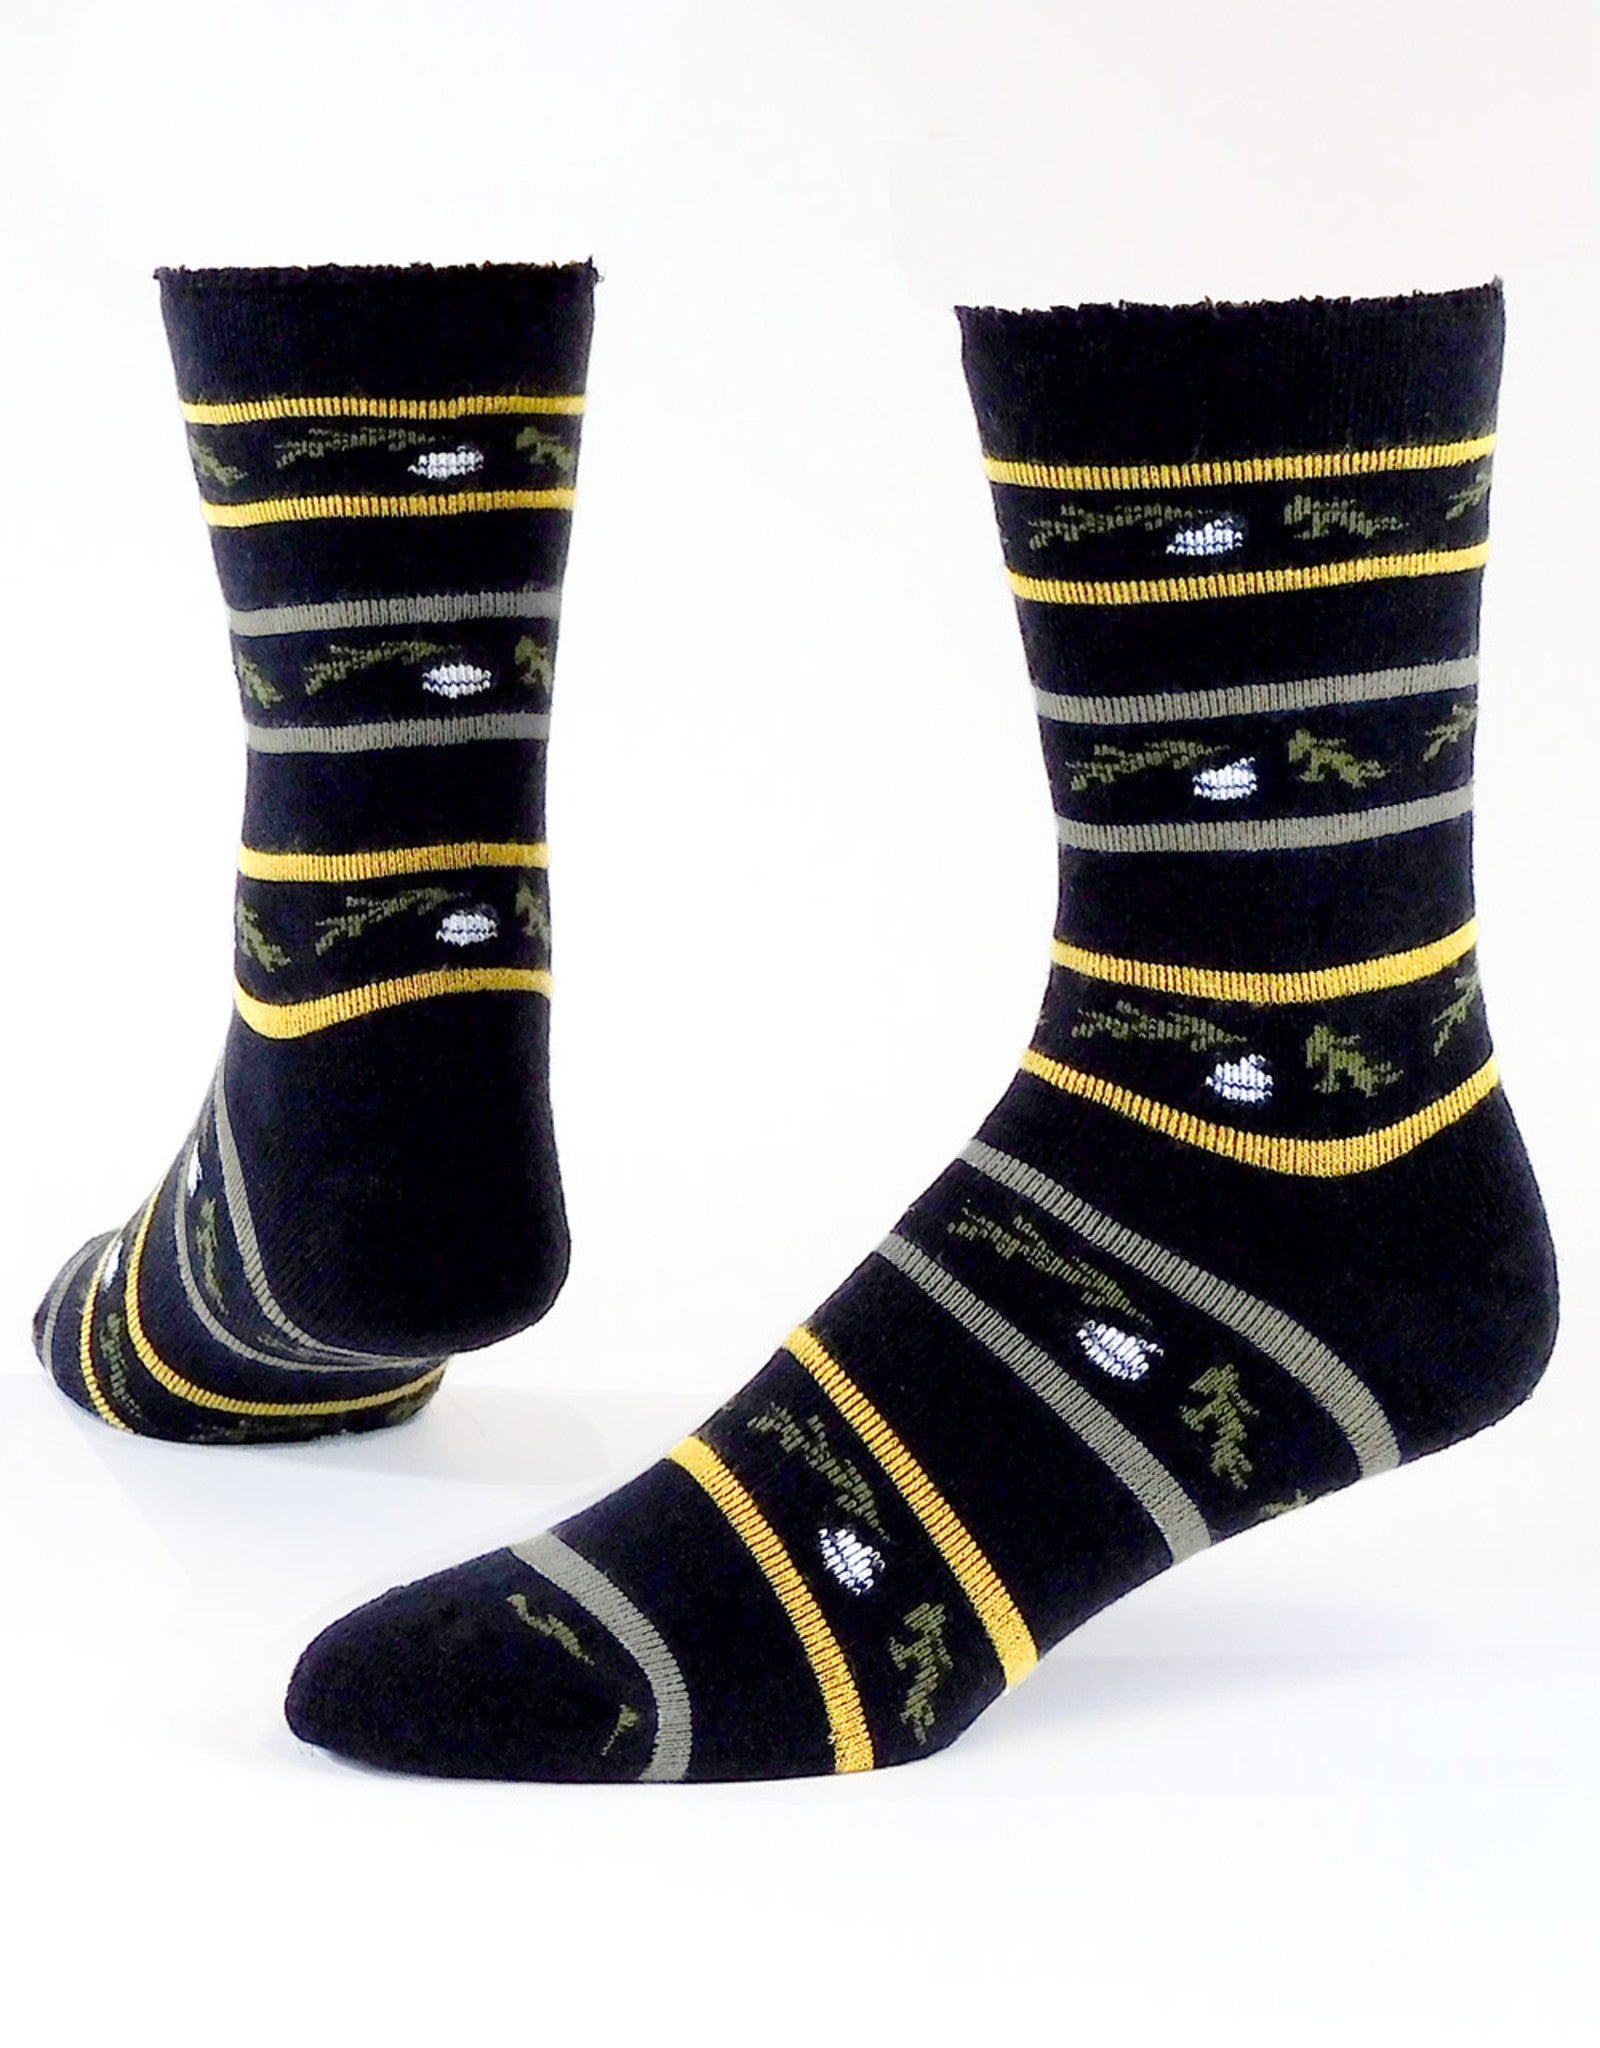 Wool Snuggle Socks - Acorn Black